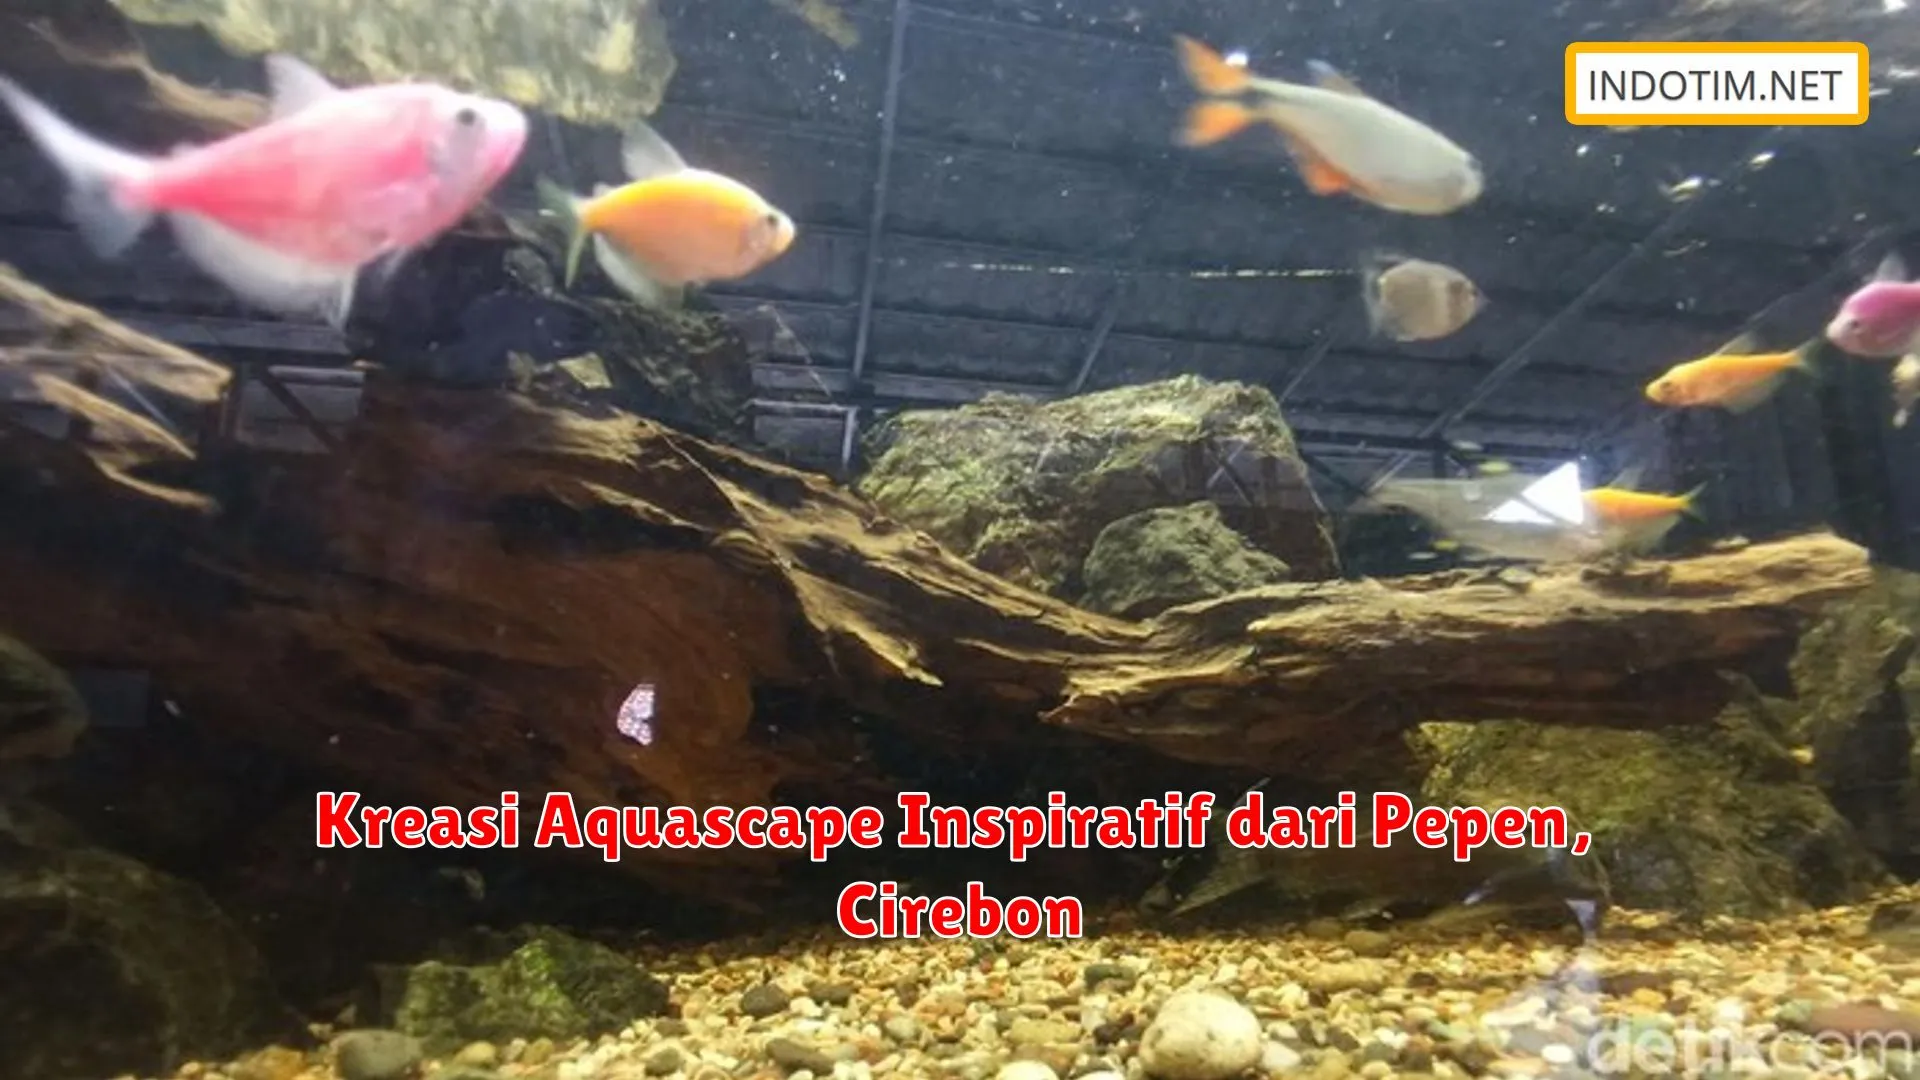 Kreasi Aquascape Inspiratif dari Pepen, Cirebon